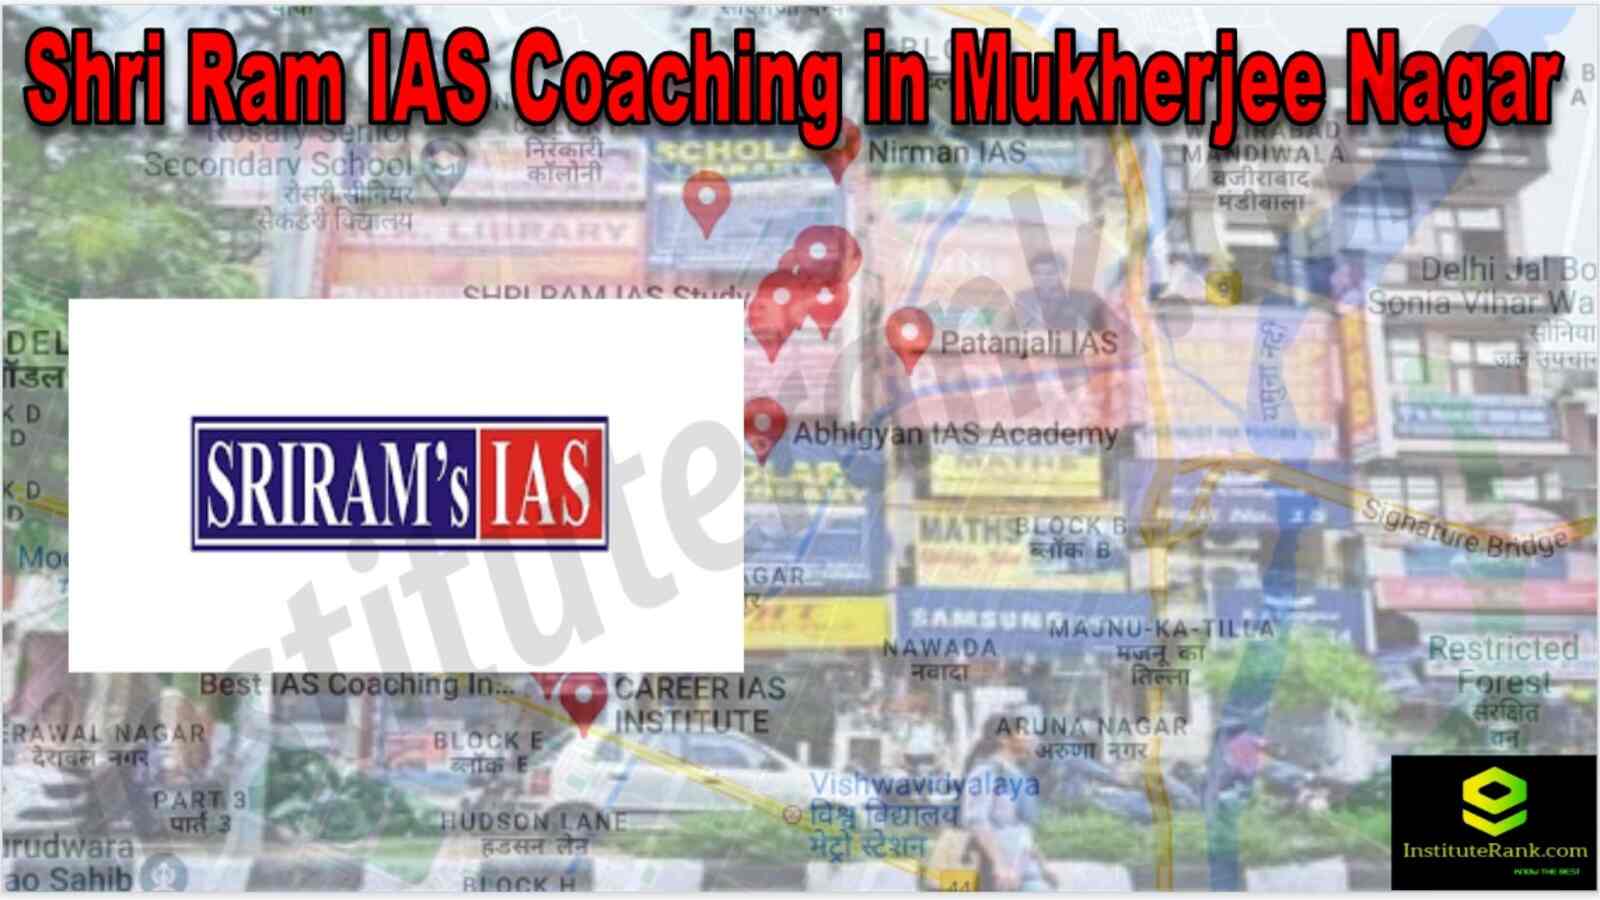 Shri Ram IAS Coaching in Mukherjee Nagar